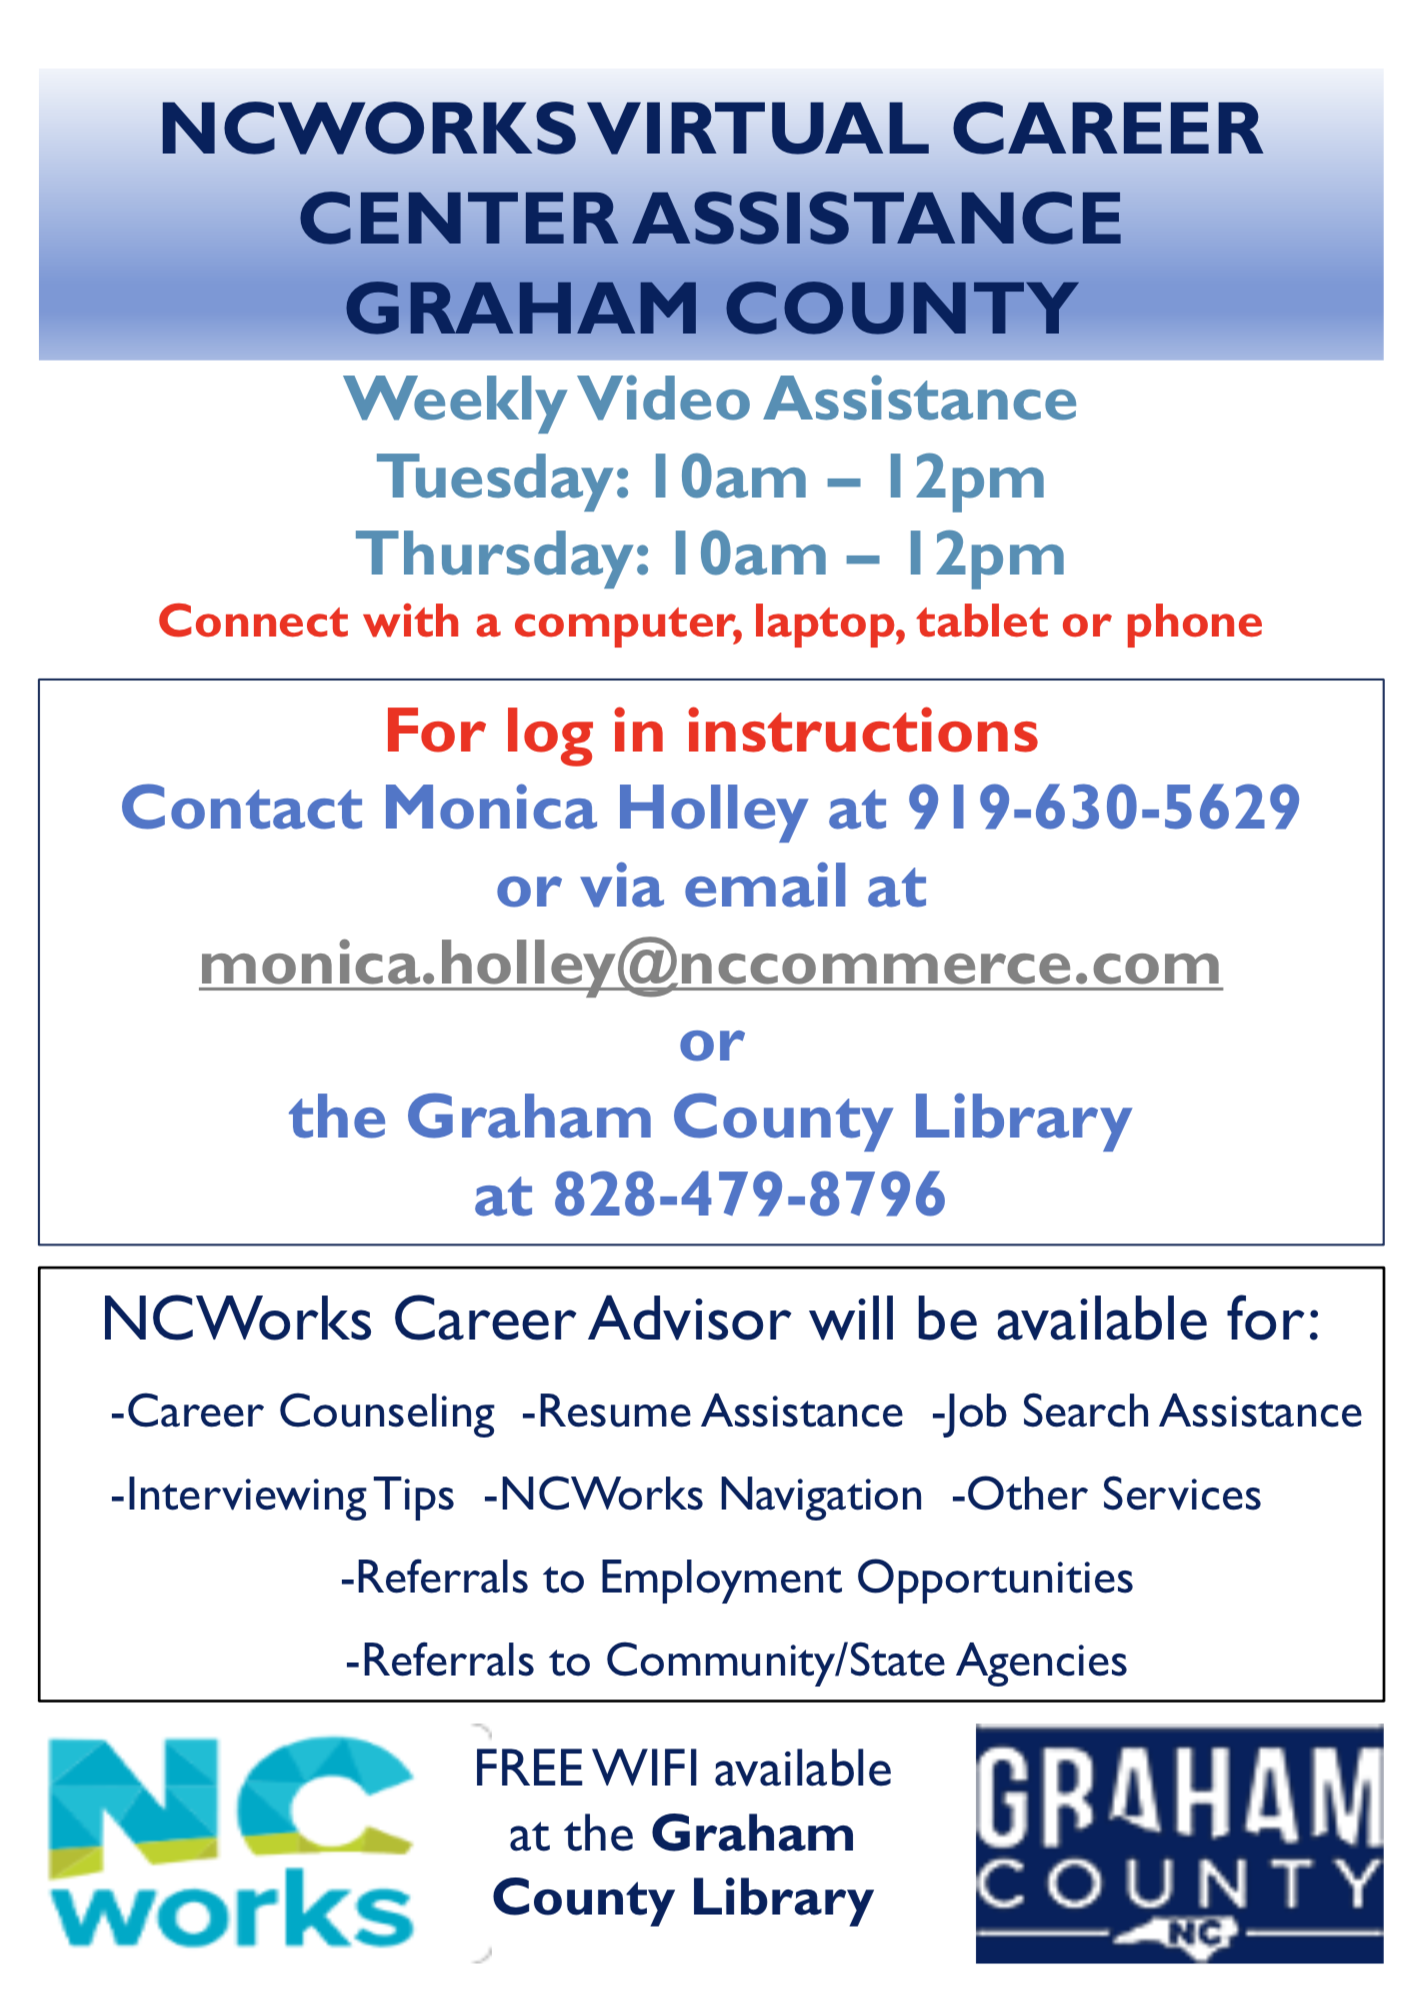 NCWorks Virtual Career Center Assistance